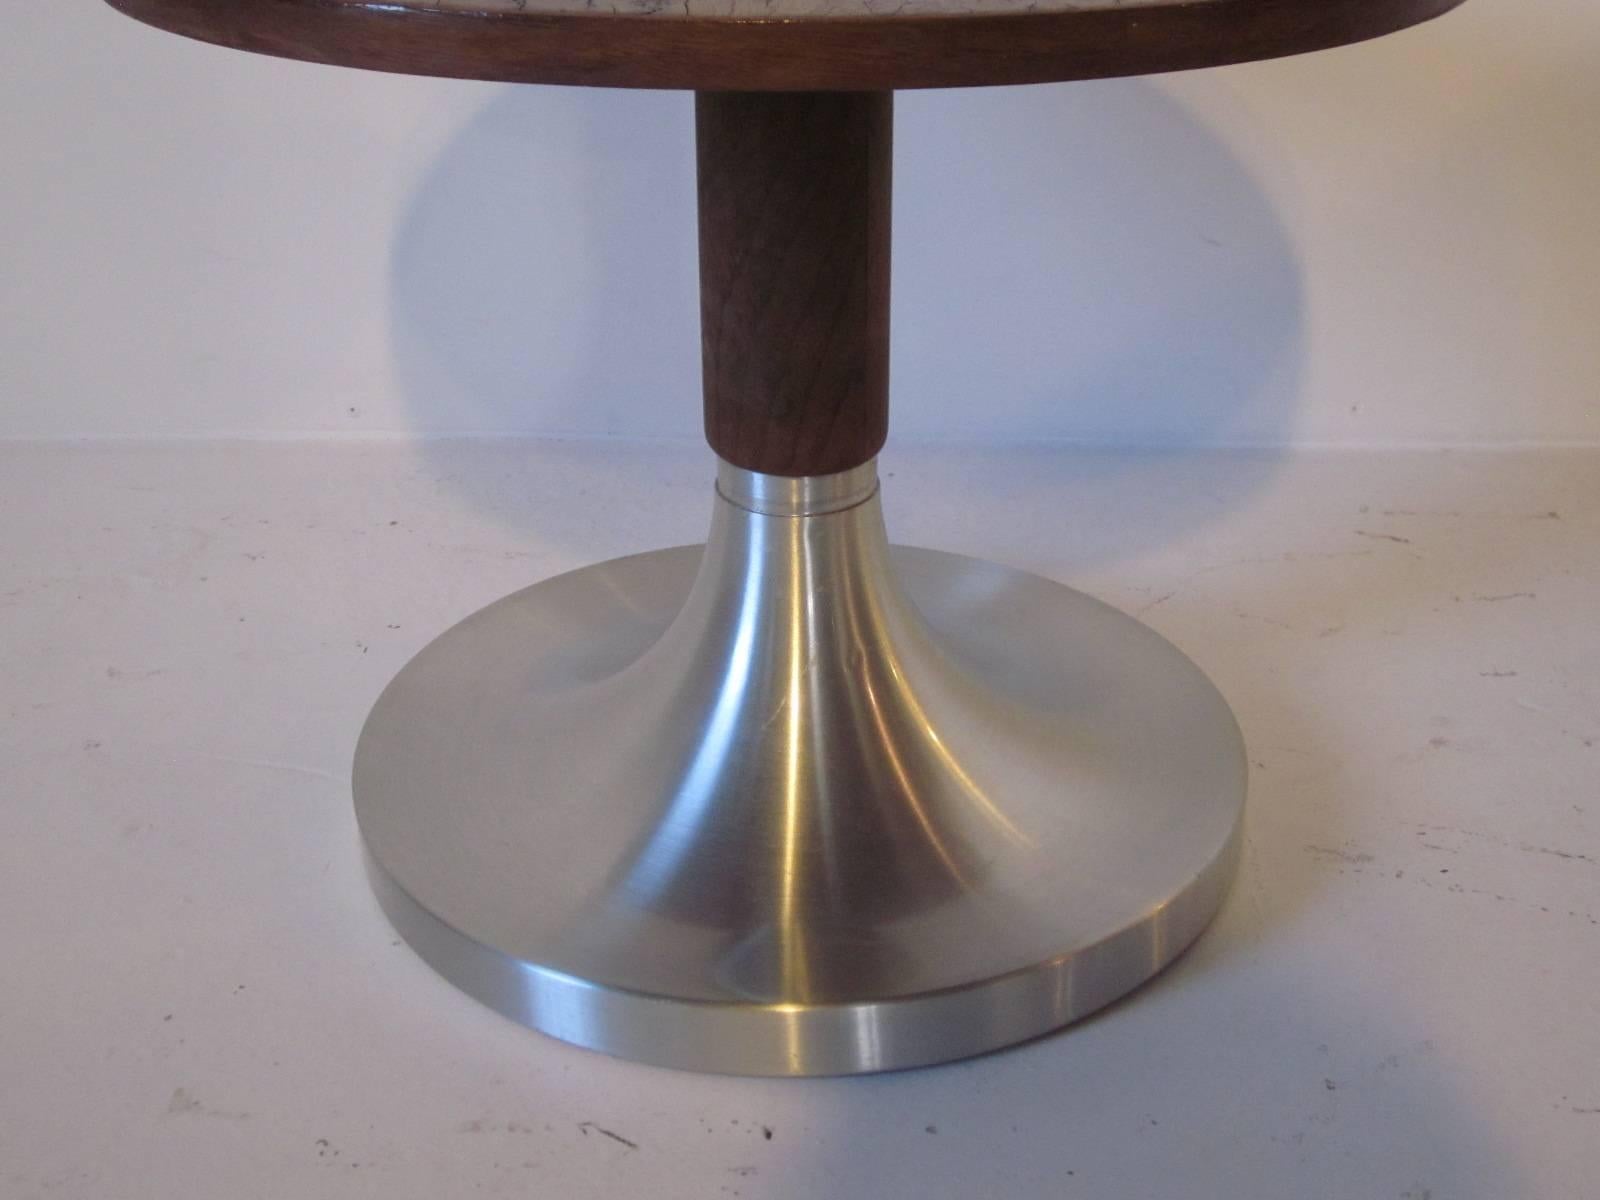 Machine Age Burl Wood and Brushed Aluminum Side Table